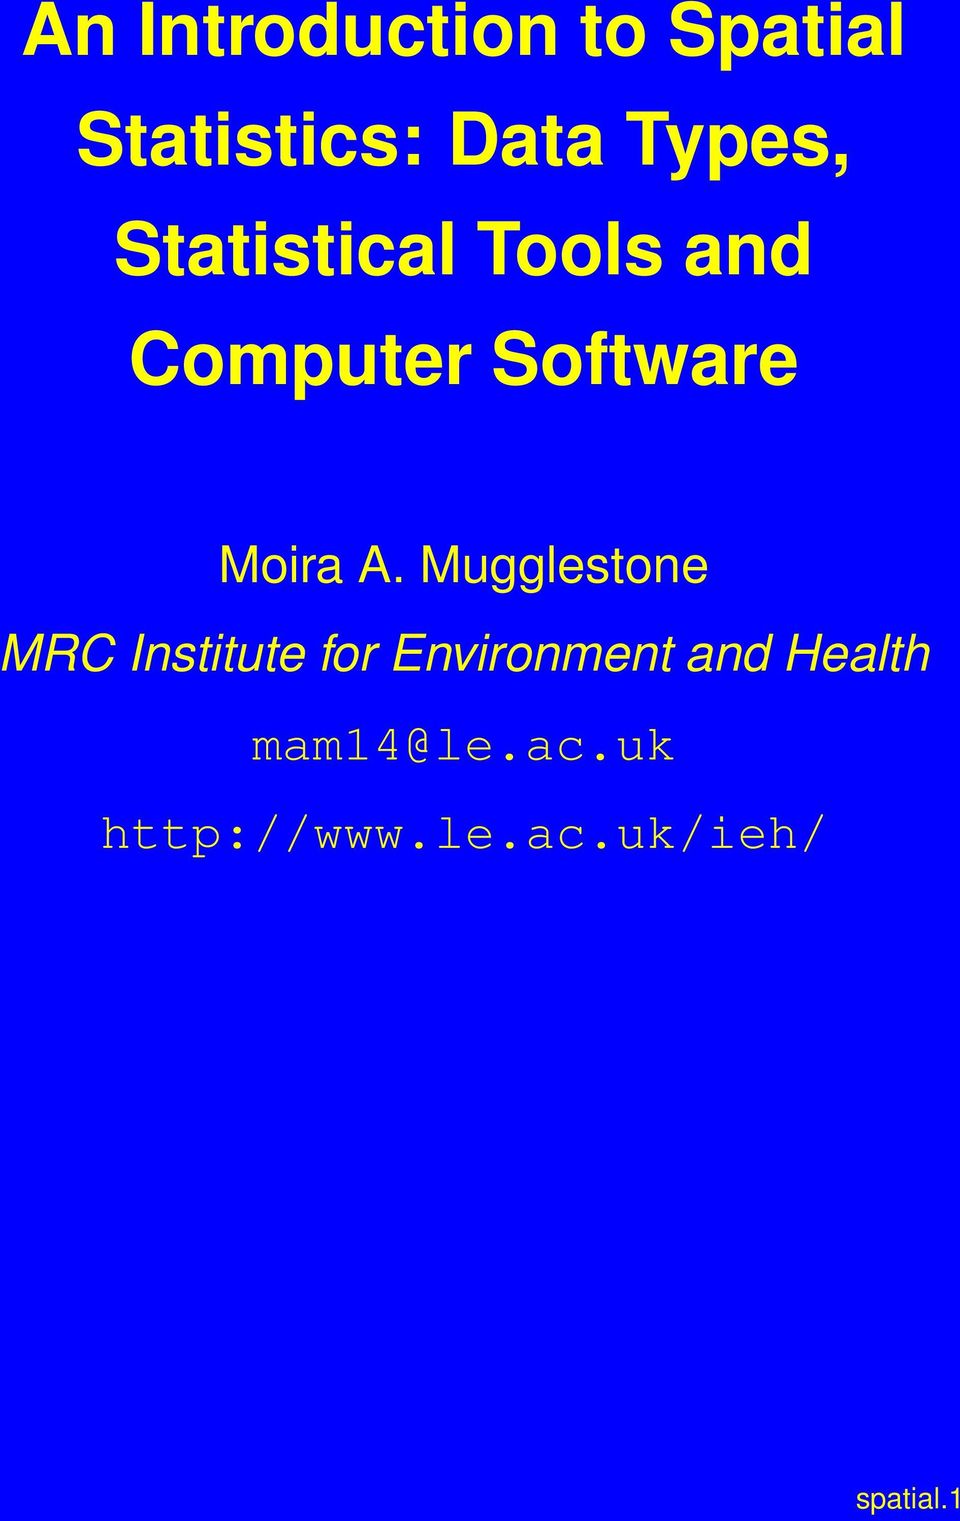 Mugglestone MRC Institute for Environment and